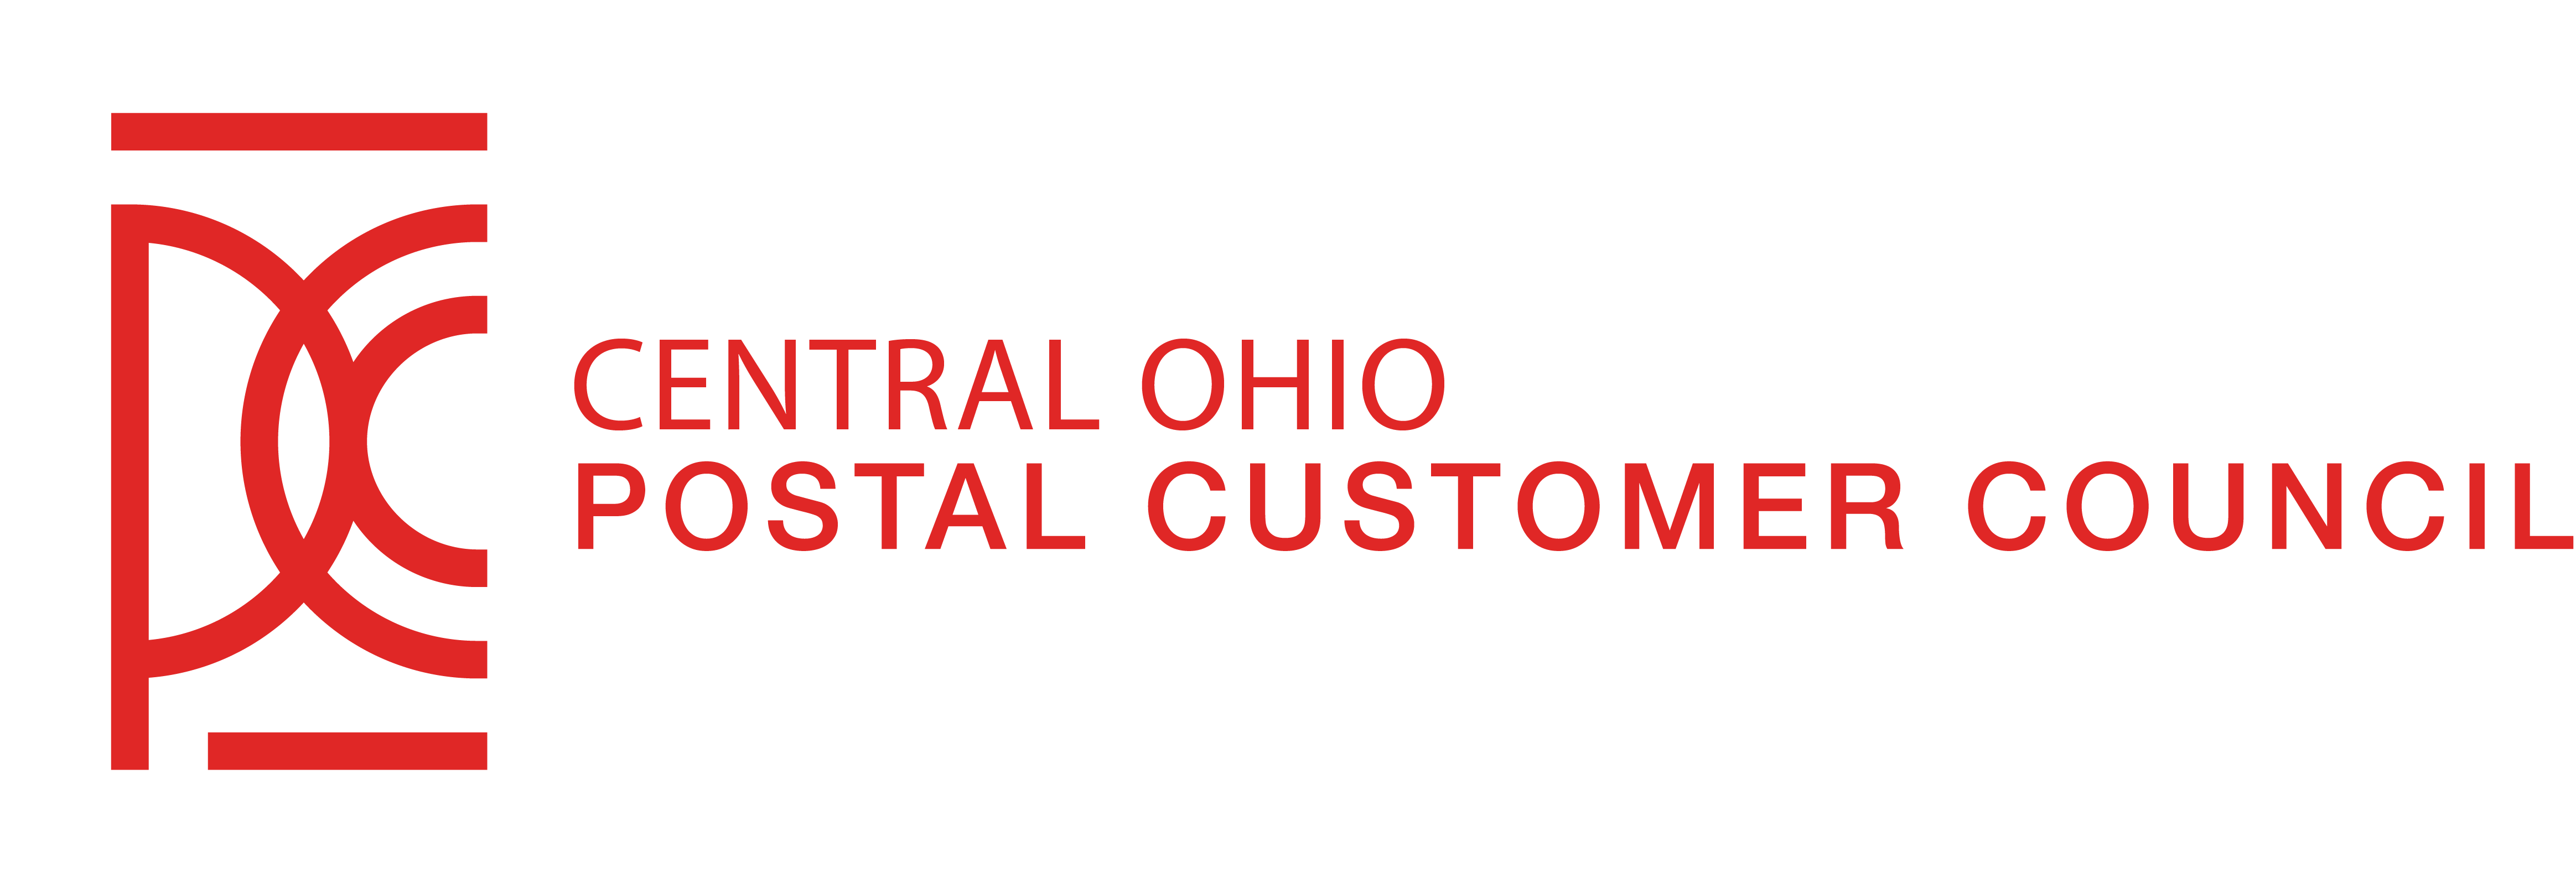 Central Ohio Postal Customer Council